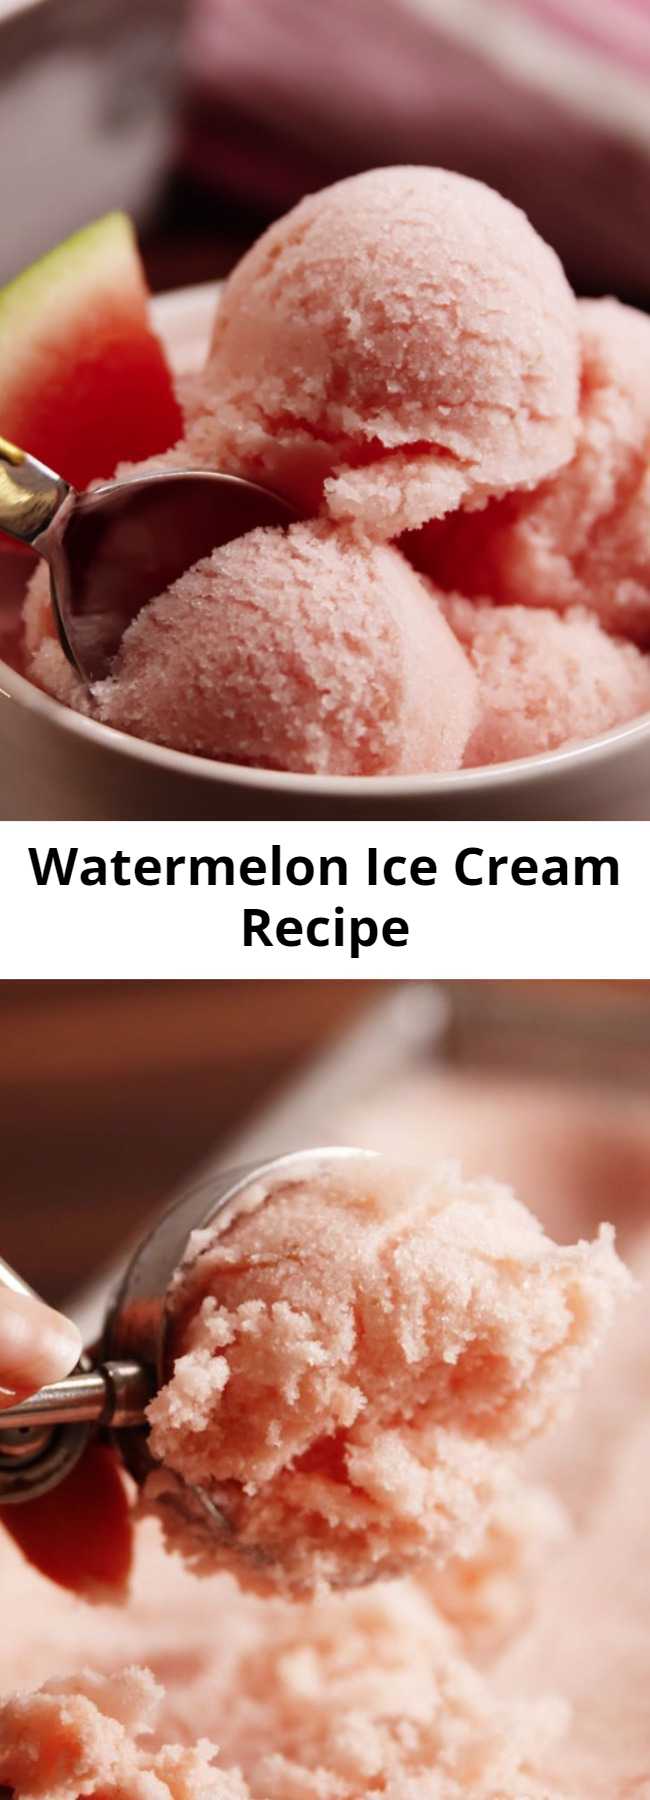 Watermelon Ice Cream Recipe - The most refreshing ice cream ever.